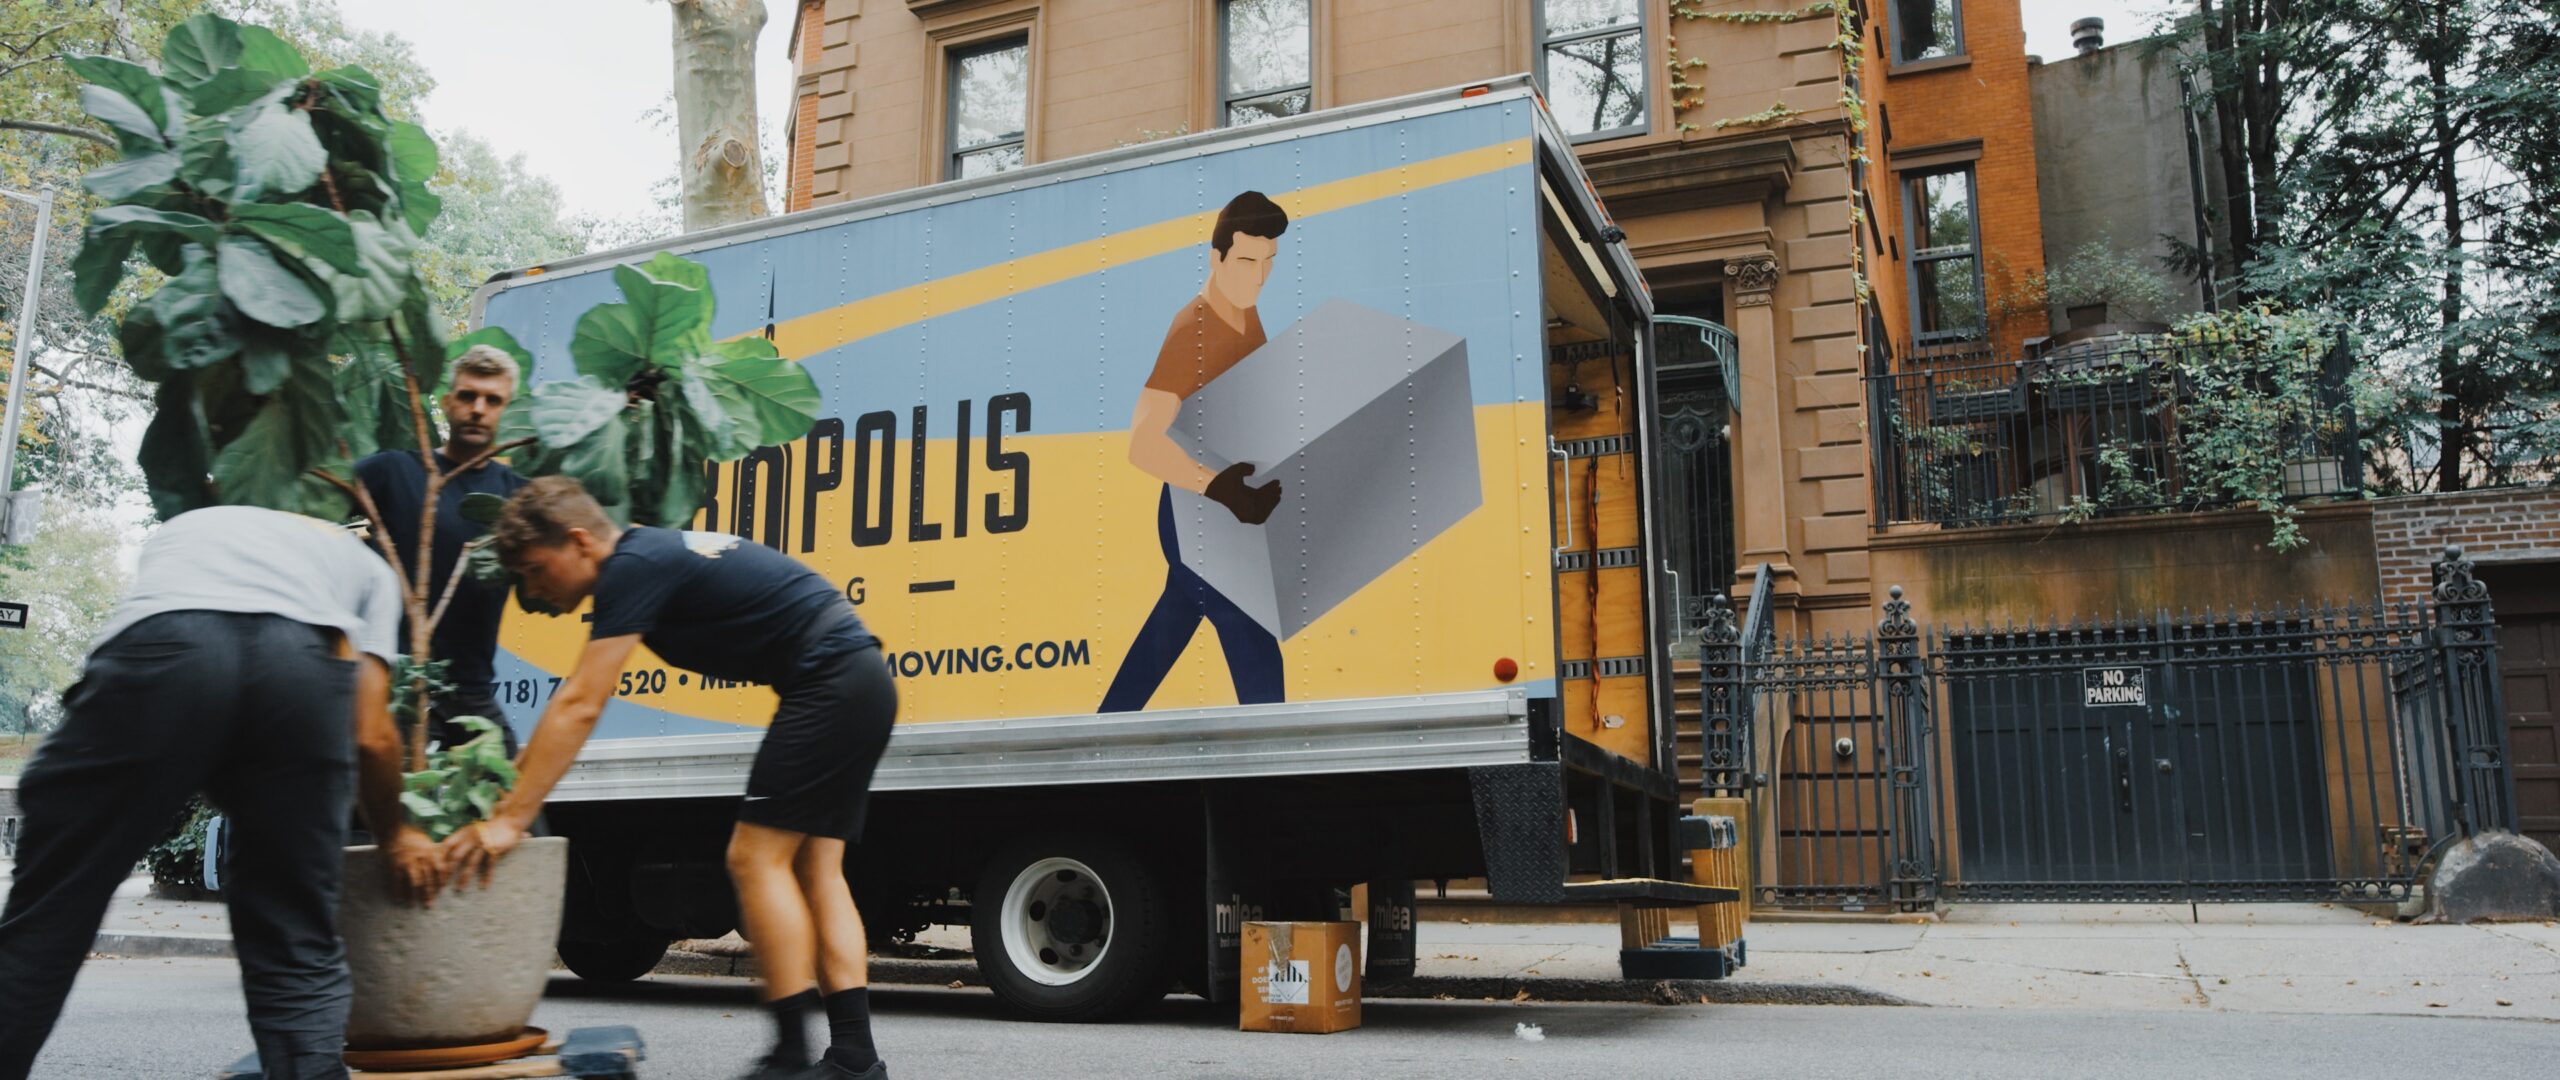 A furniture moving truck